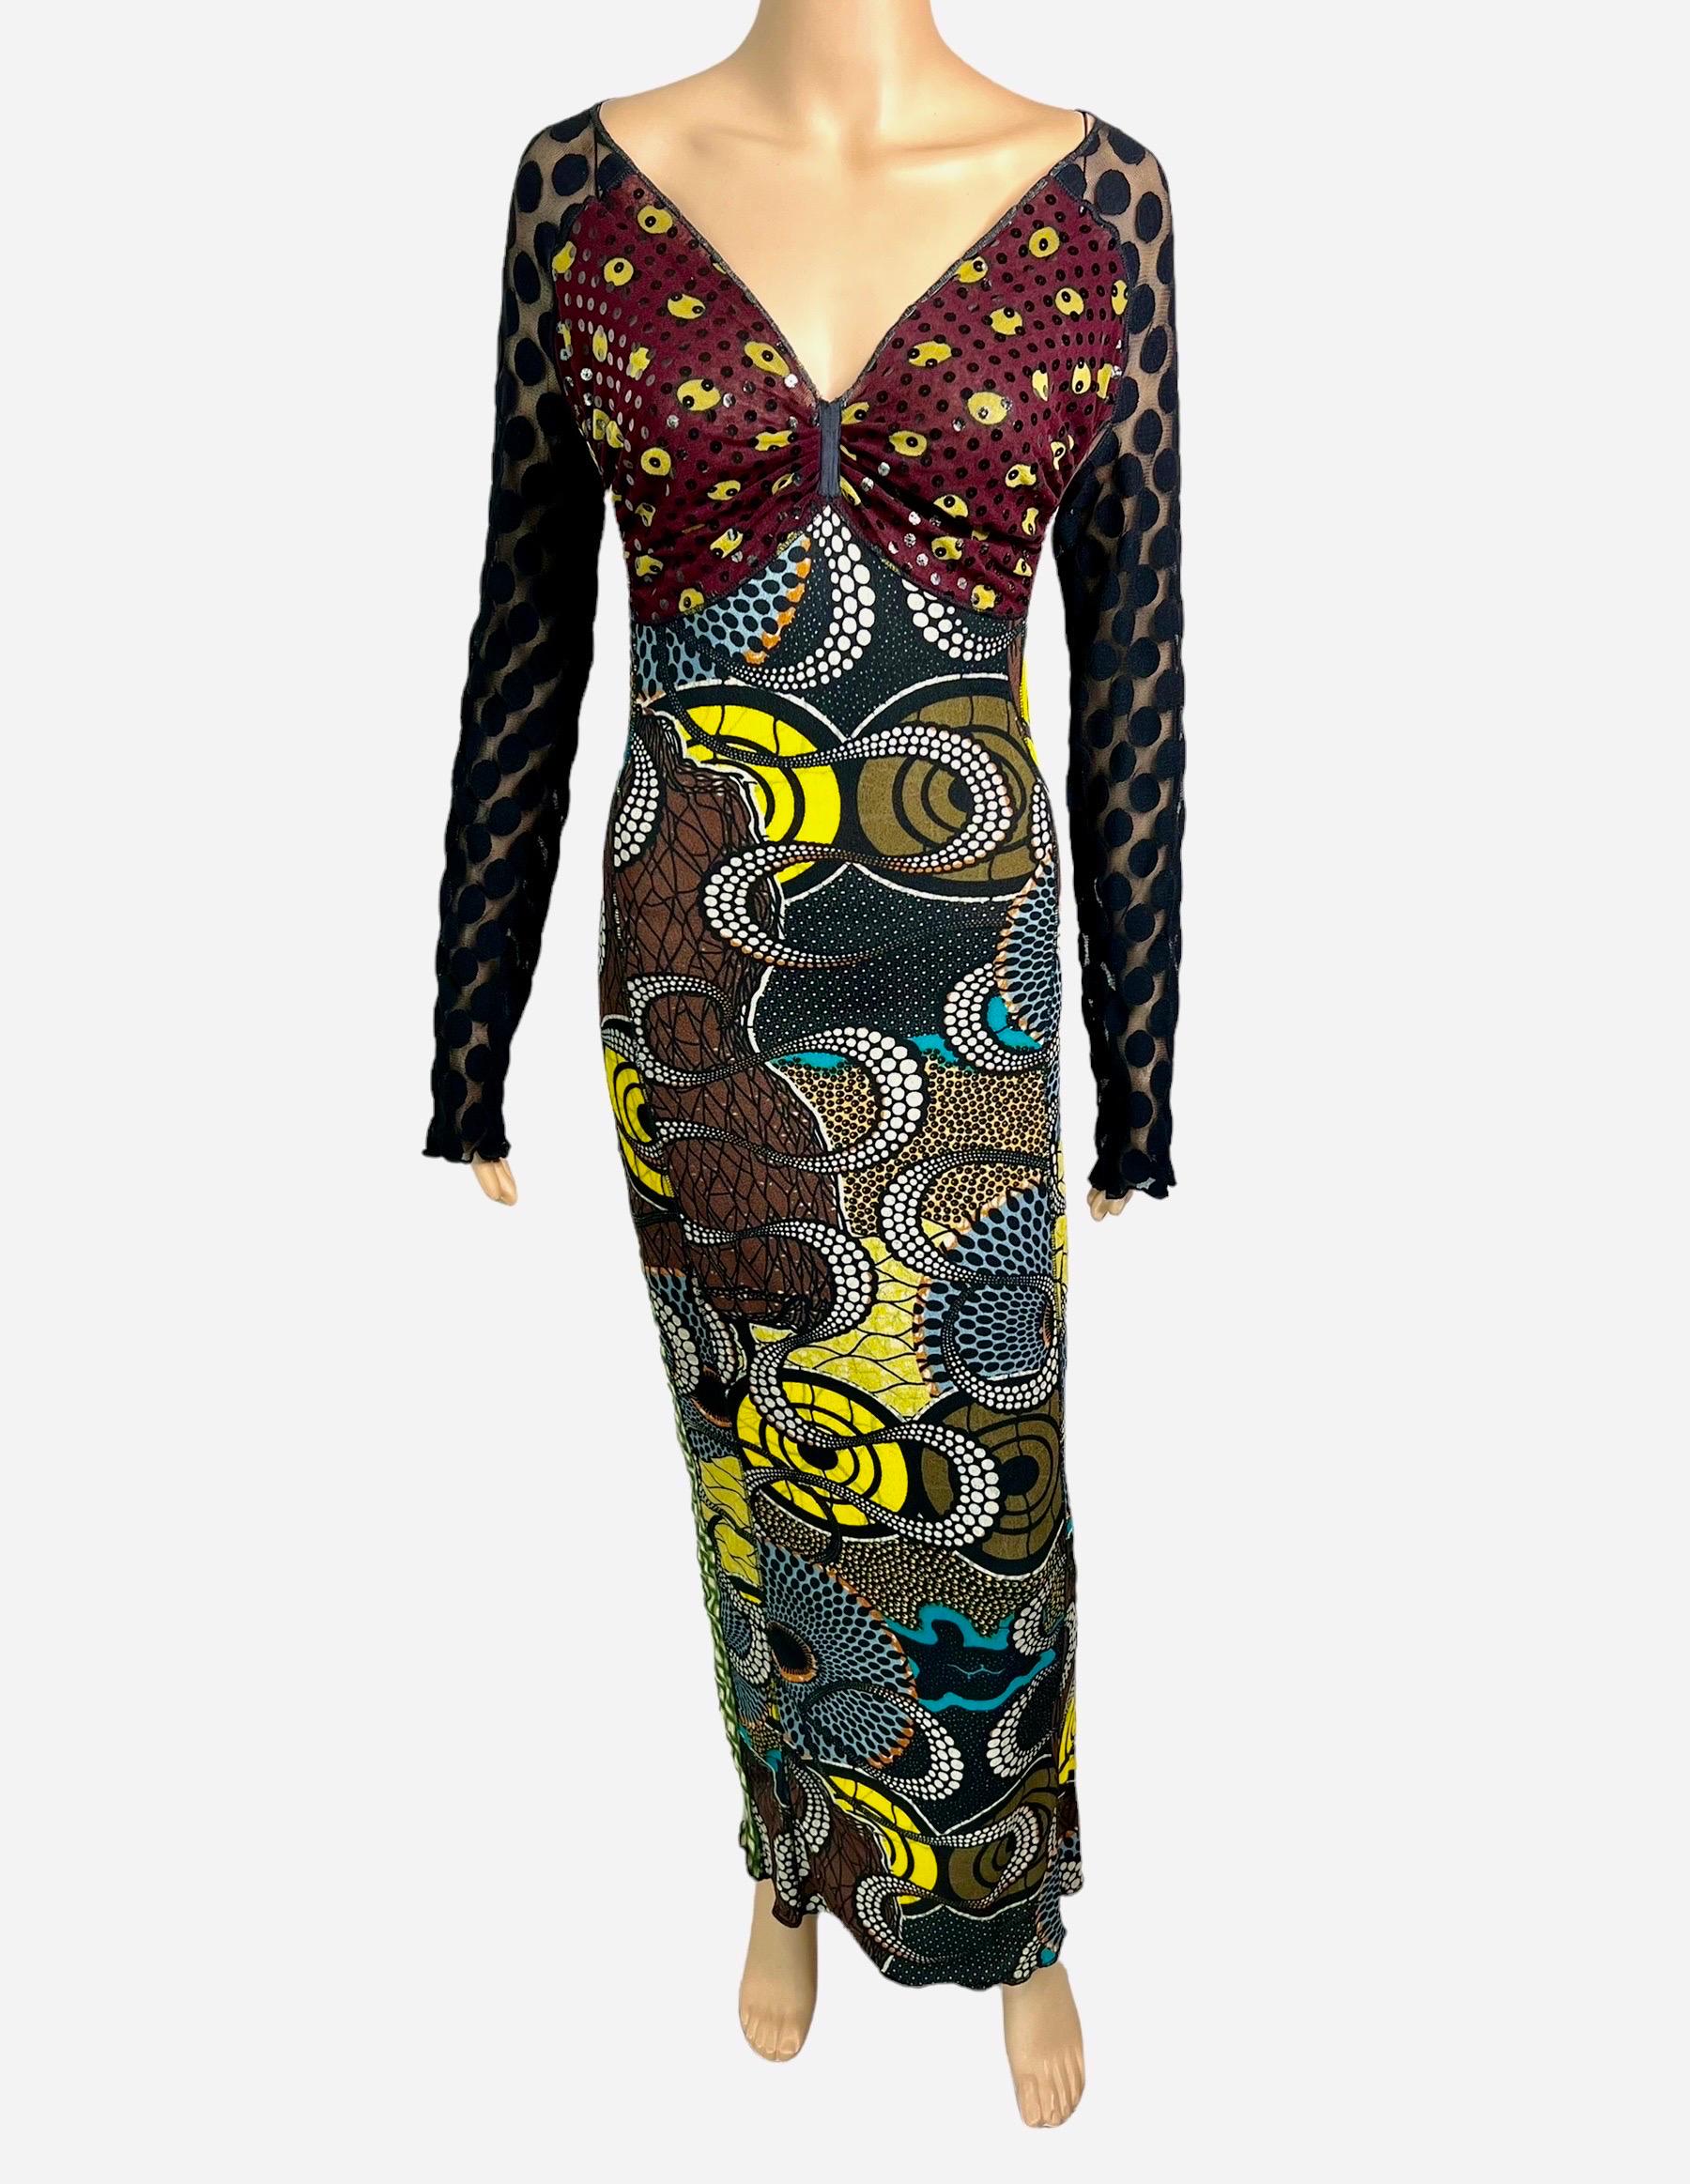 Jean Paul Gaultier Soleil c.1996 Op Art Circle Dots Print Embellished Cutout Back Semi-Sheer Maxi Dress
